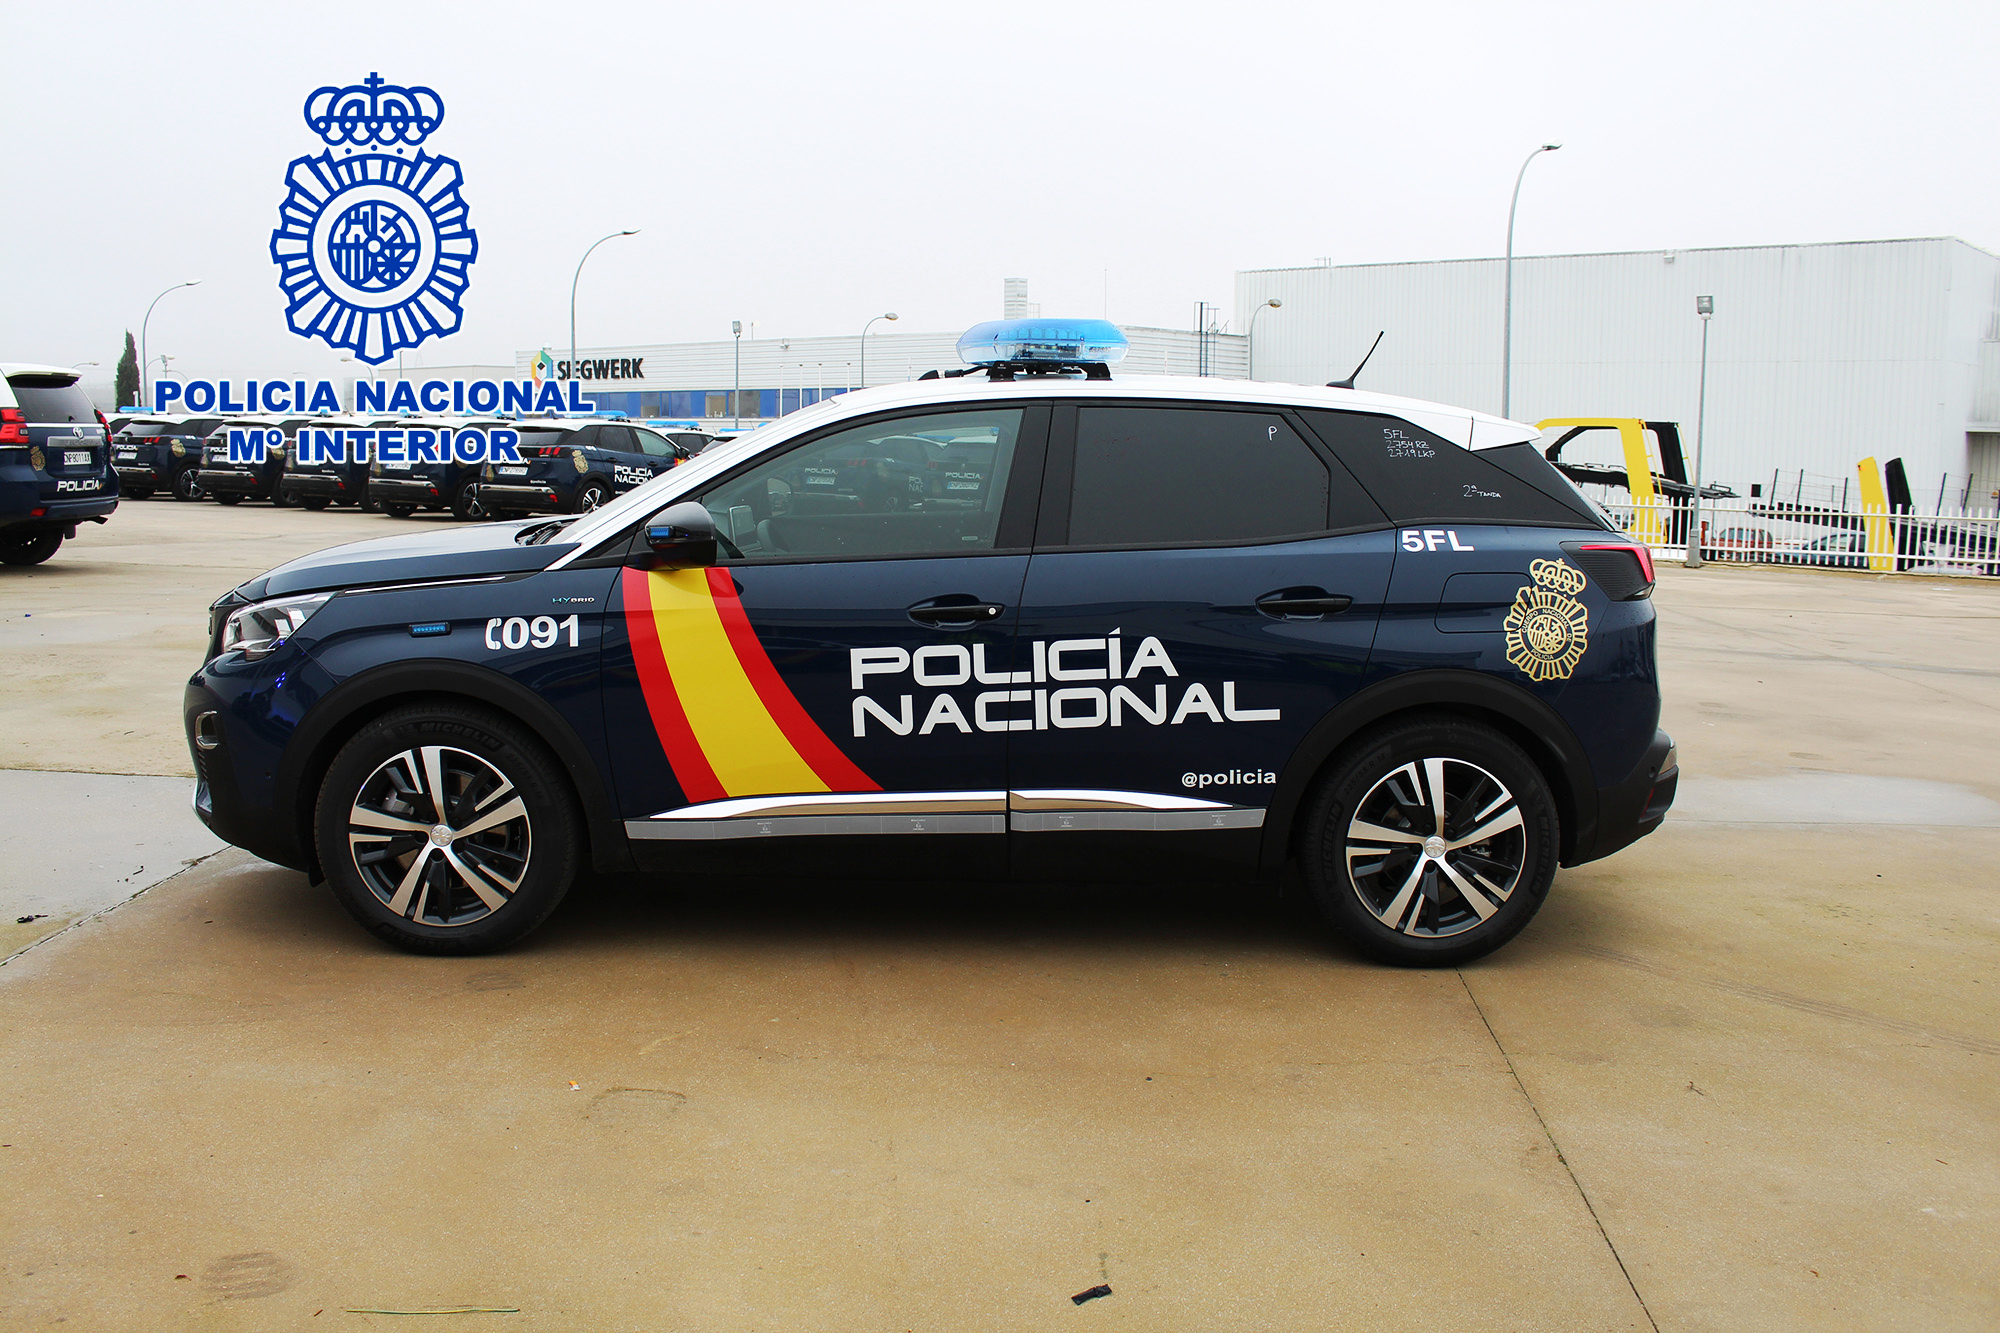 Hybrid Policia Nacional Car